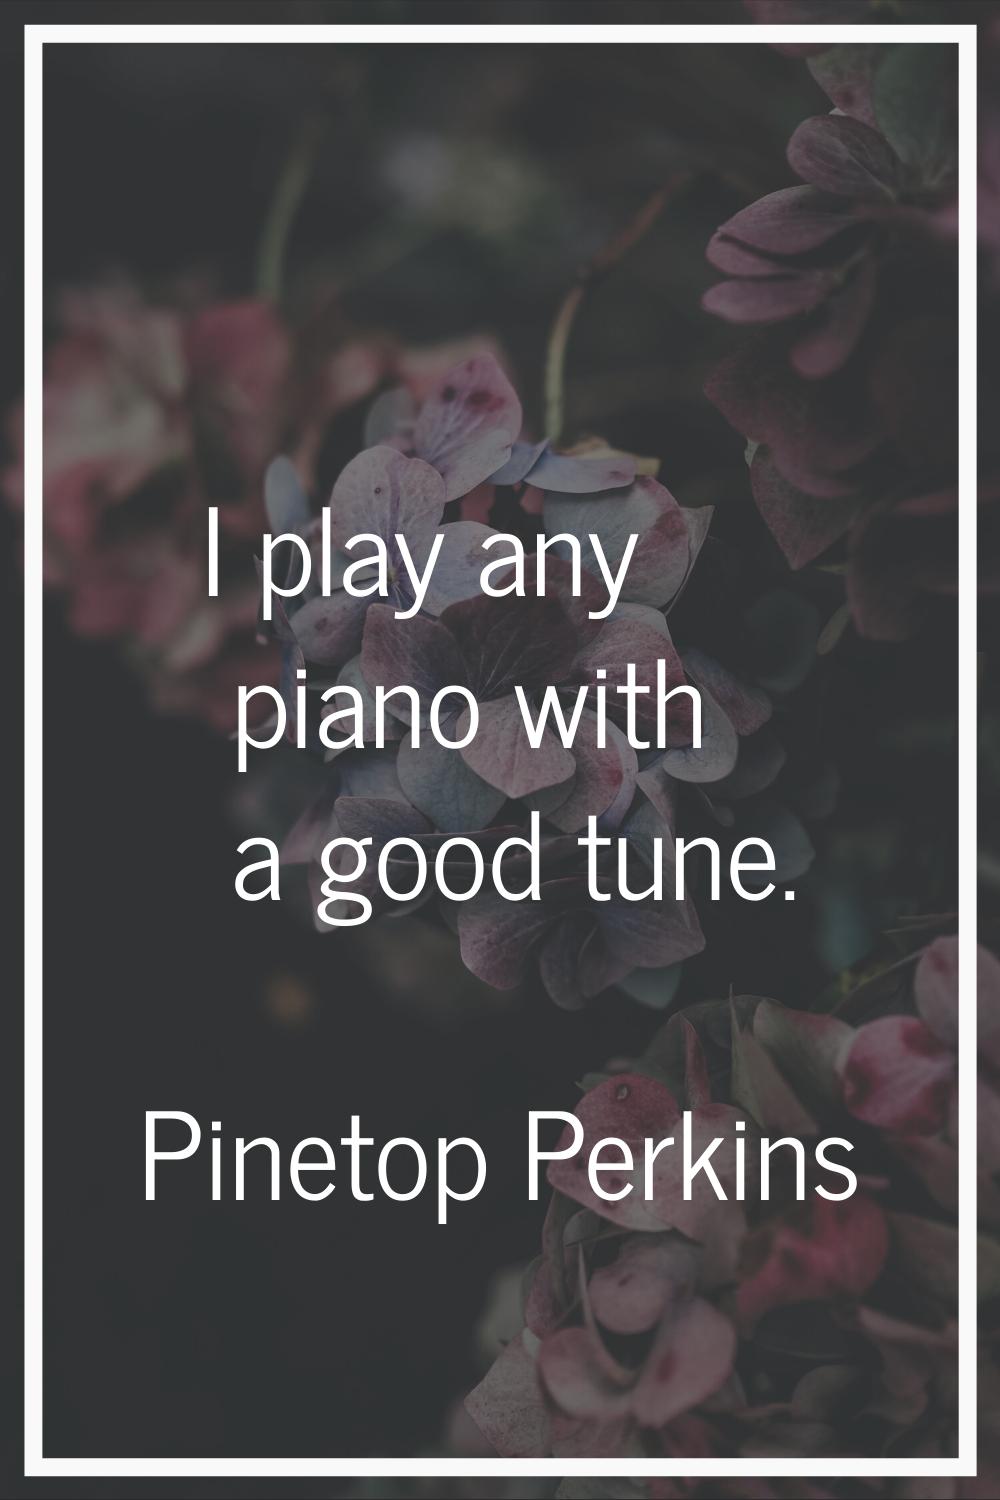 I play any piano with a good tune.